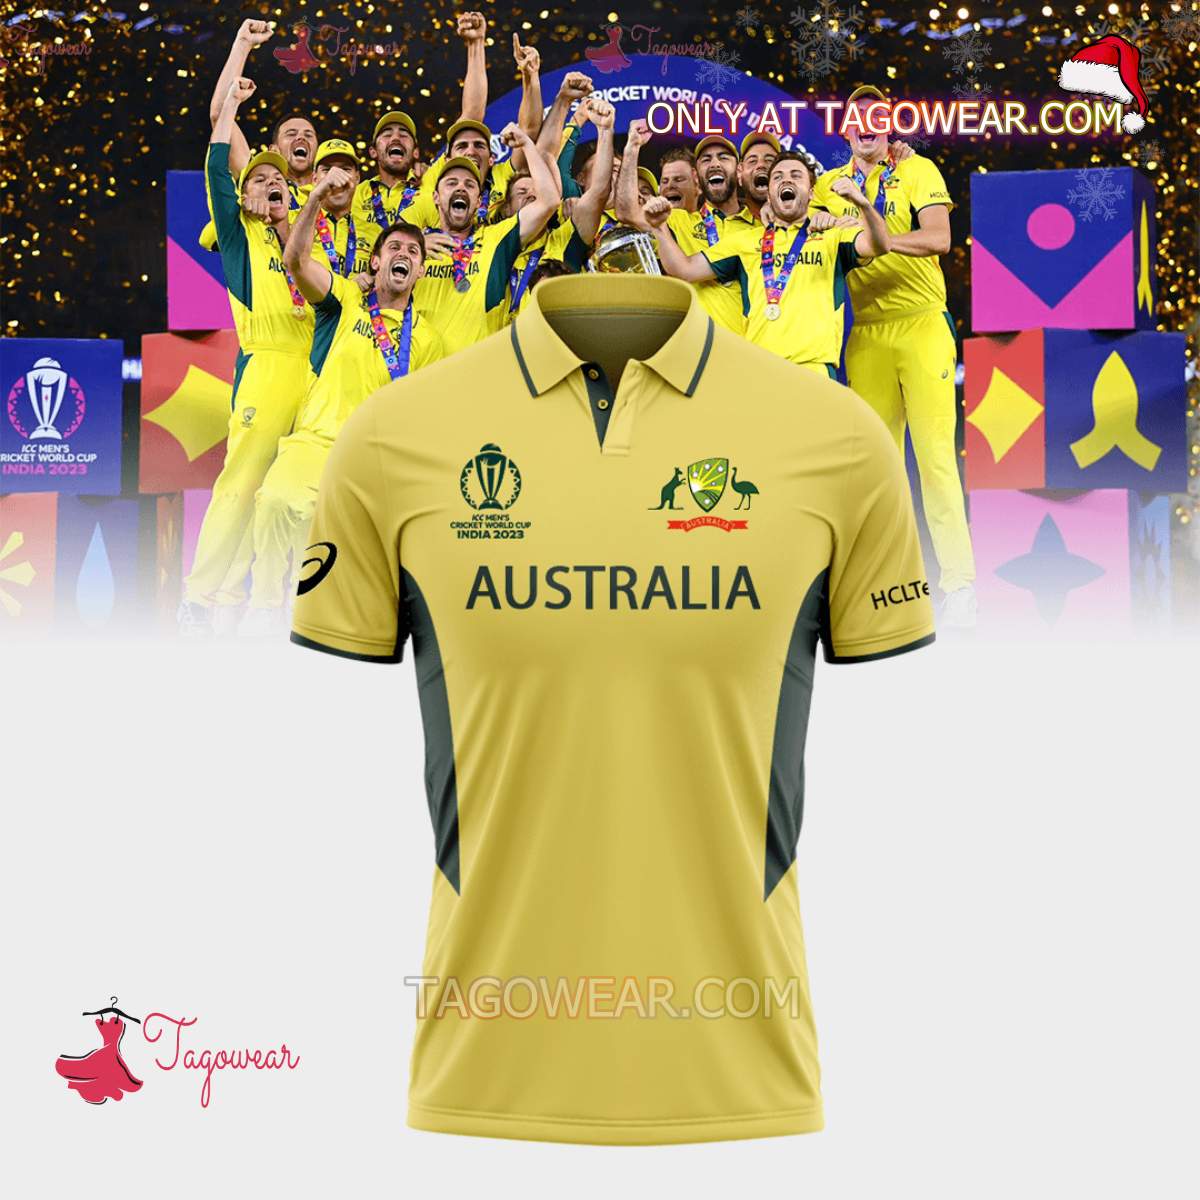 Australia Team Icc Men’s Cricket World Cup Champions 2023 Polo Shirt a